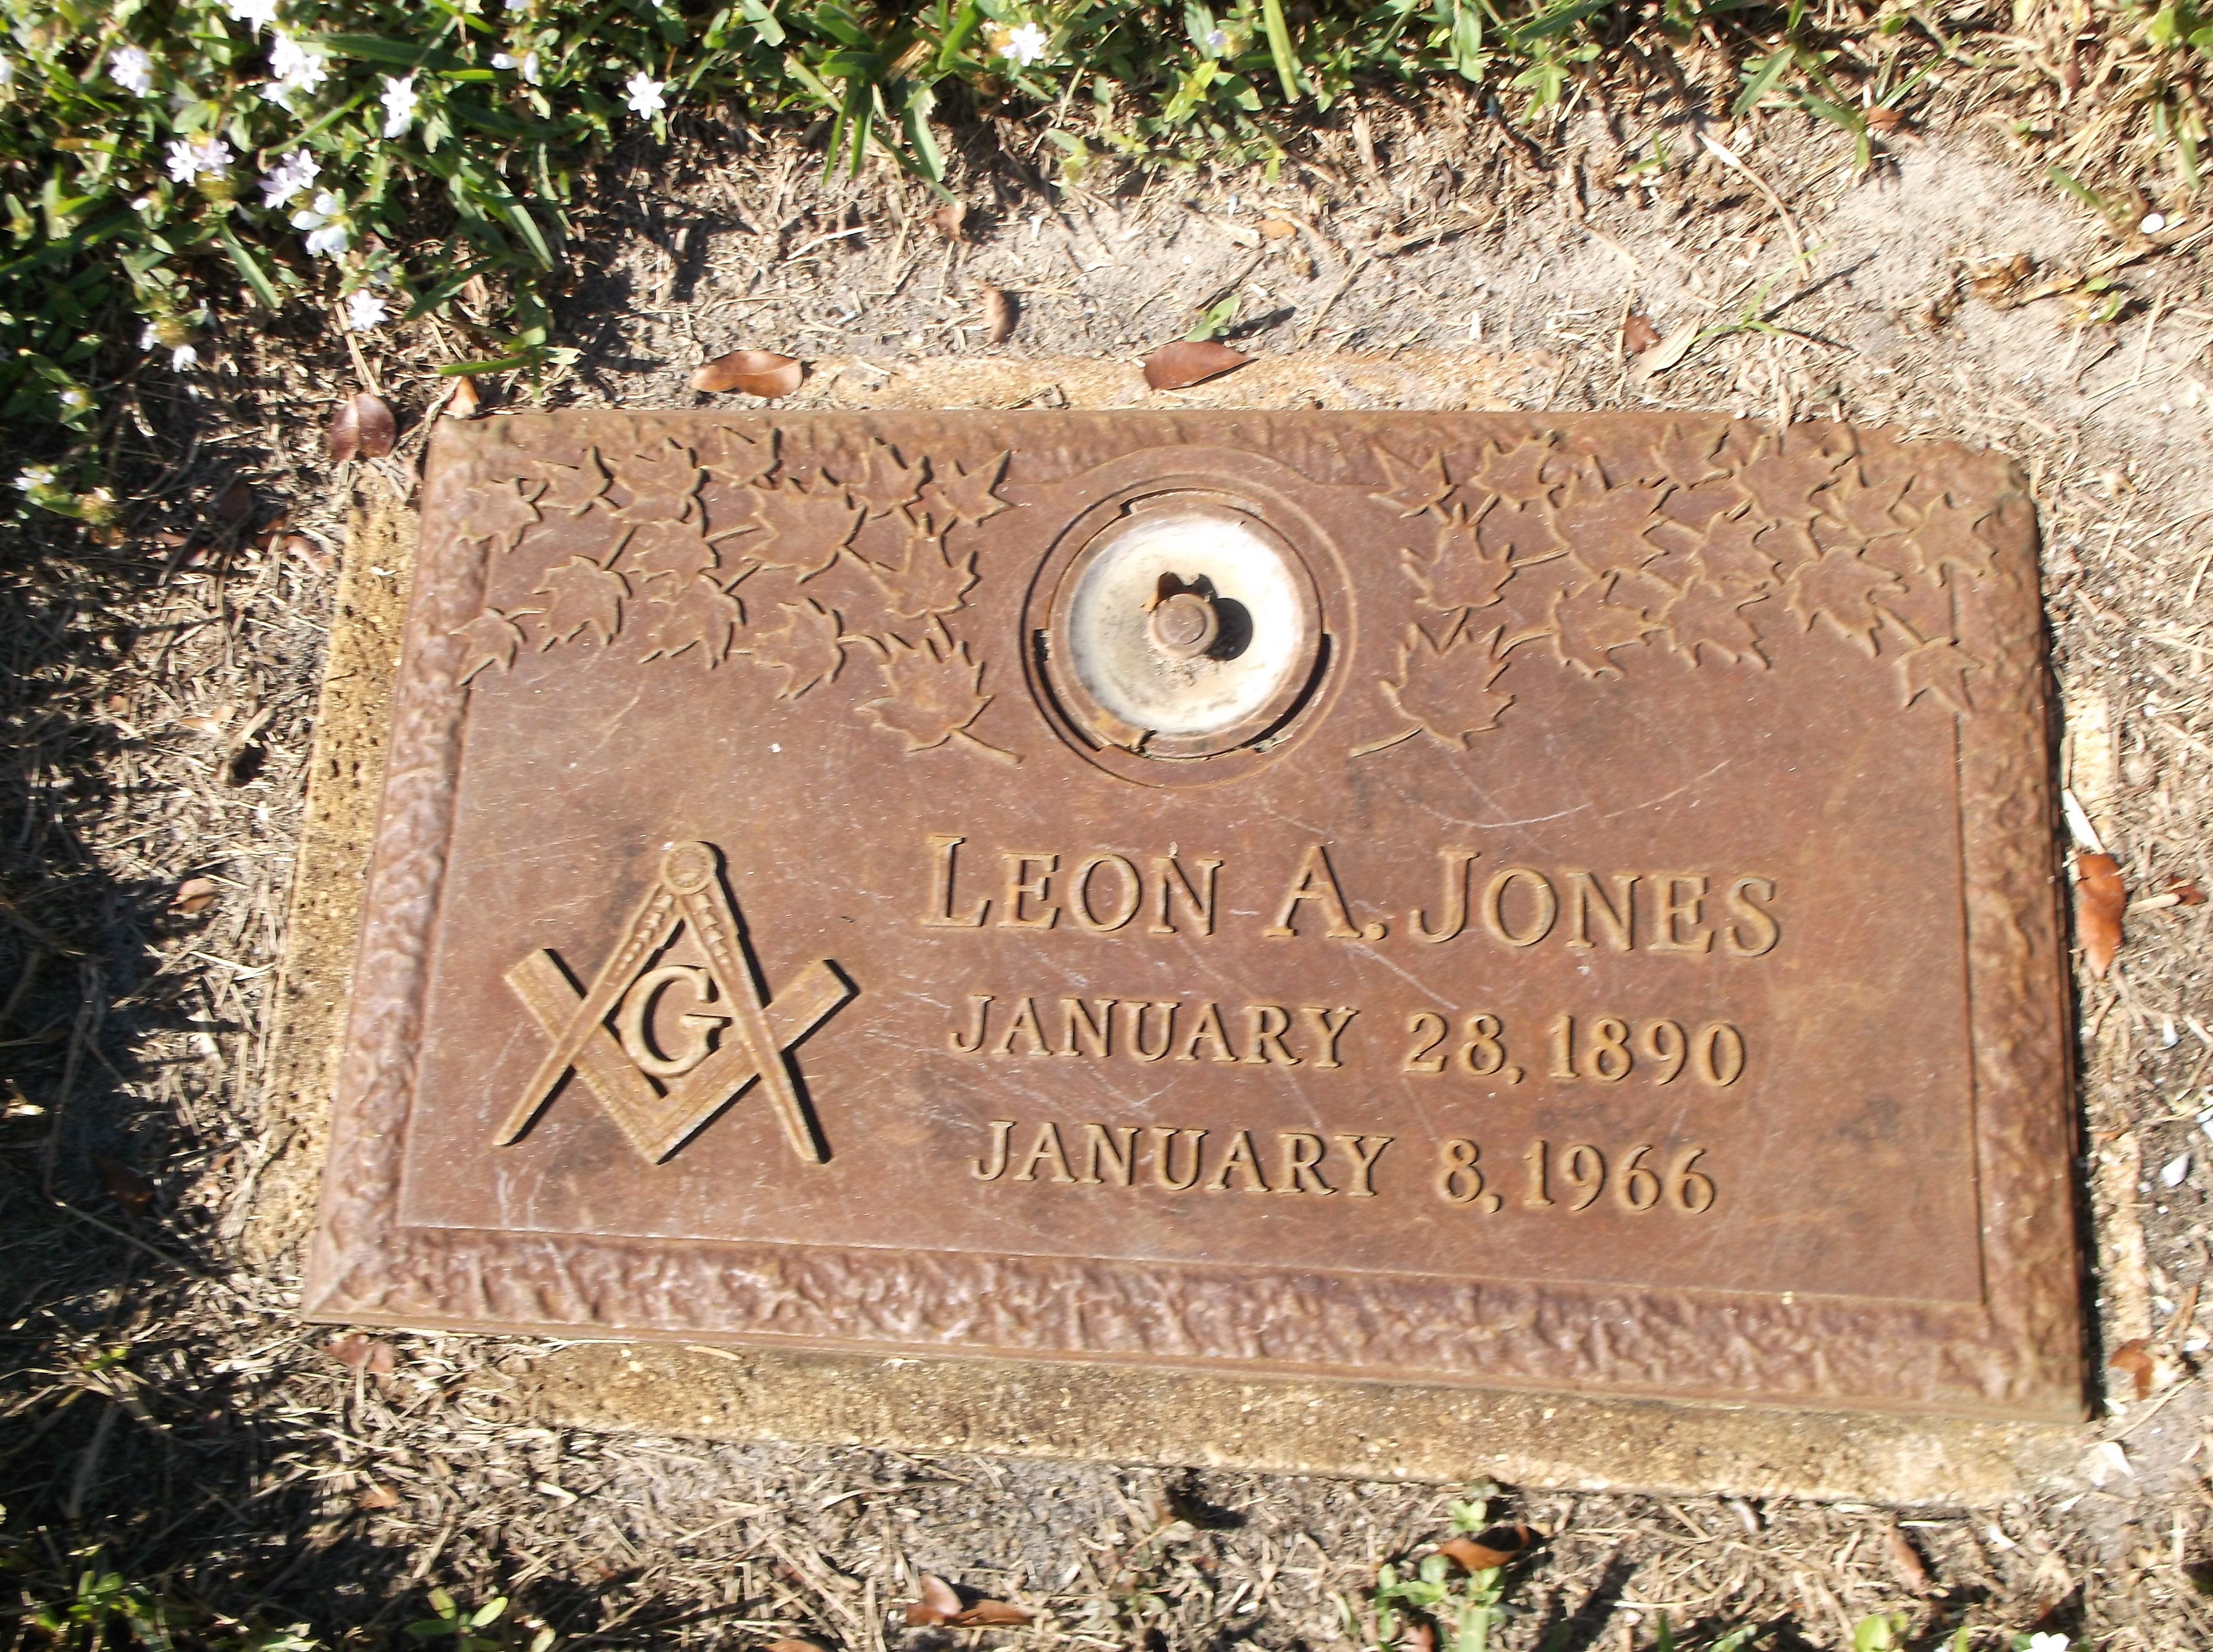 Leon A Jones